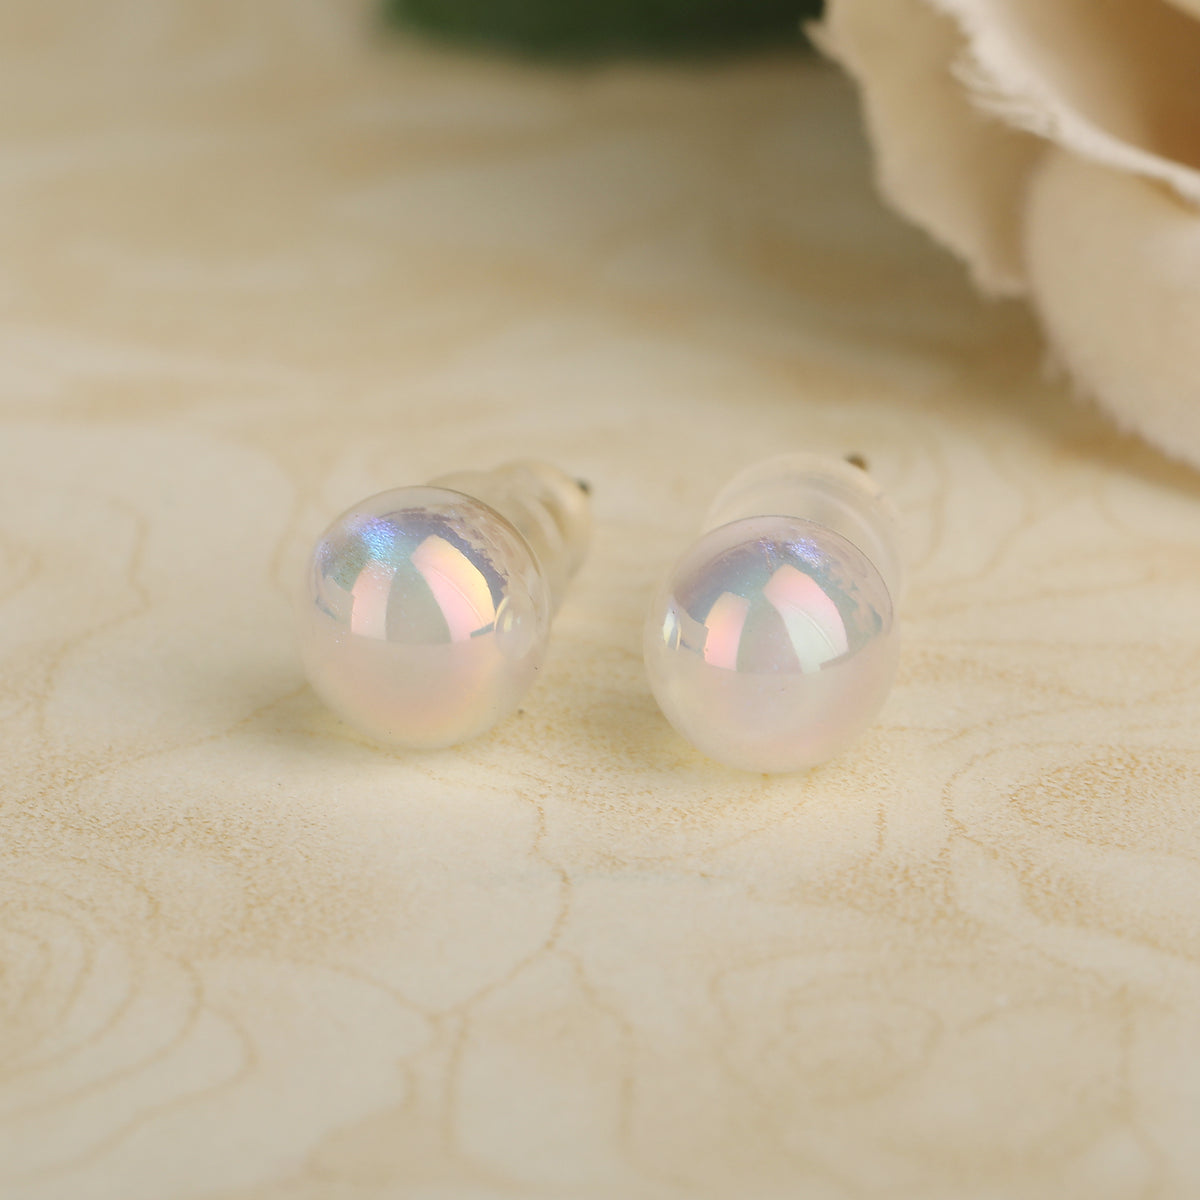 White pearl silver earring